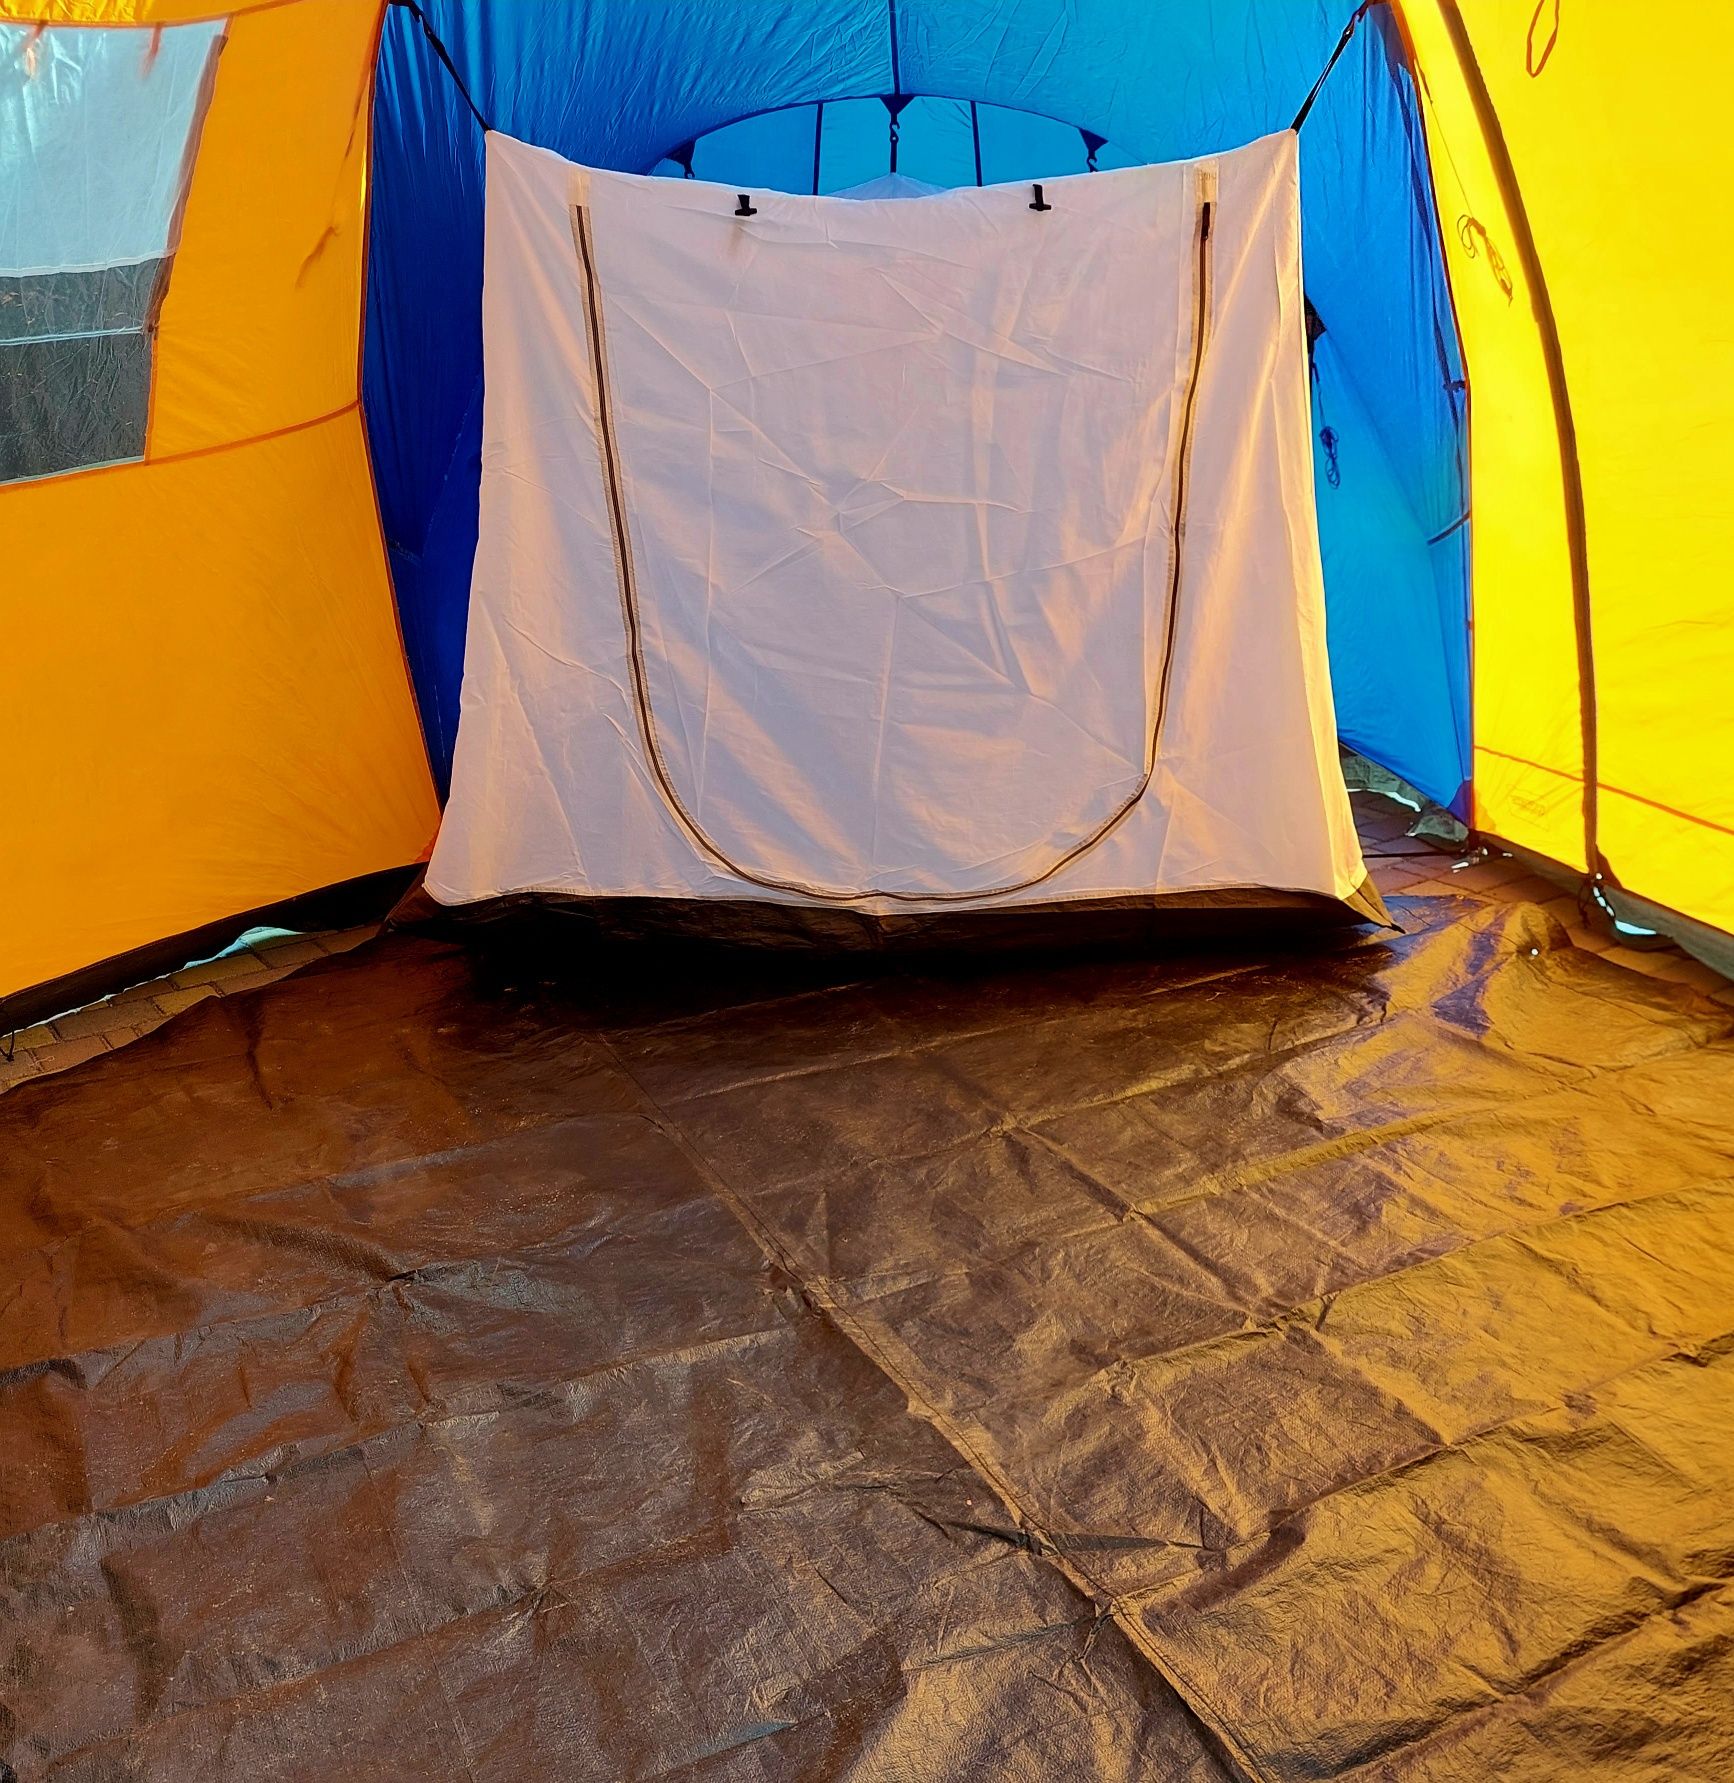 Footpath Outdoor Pursuits 3 Room 6 Man Tent кемпінгова палатка